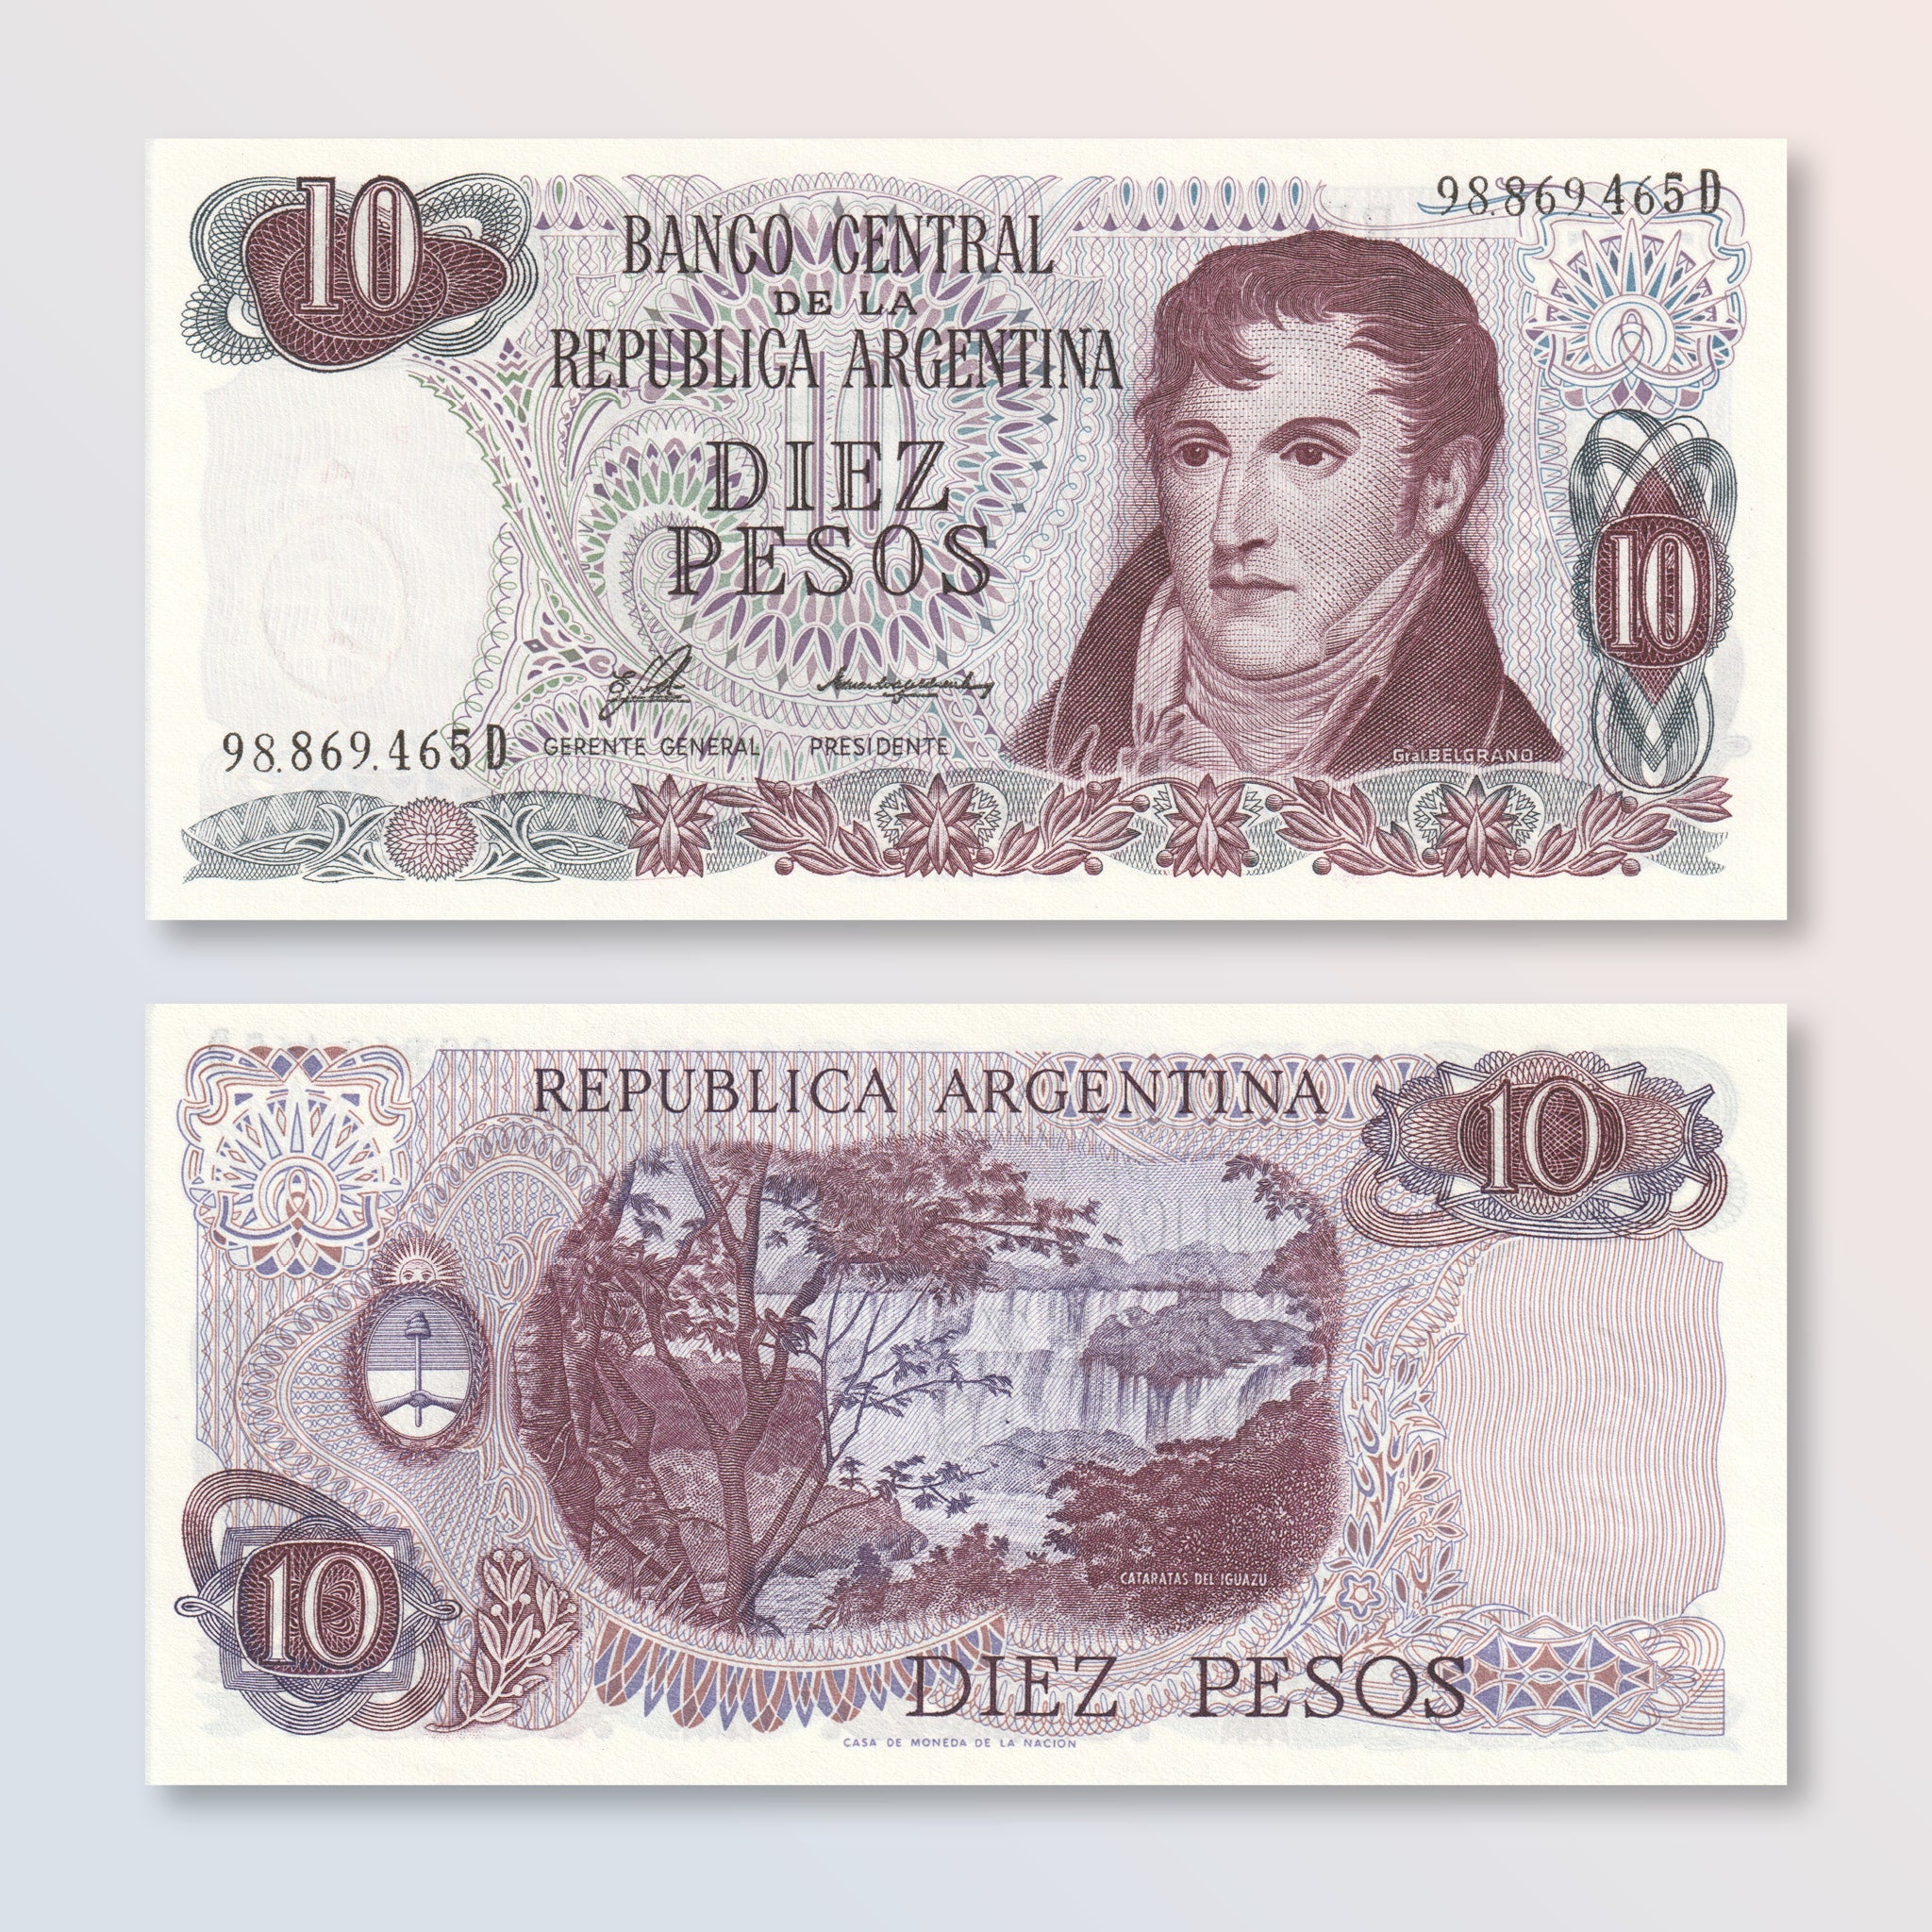 Argentina 10 Pesos, 1976, B353a, P300, UNC - Robert's World Money - World Banknotes